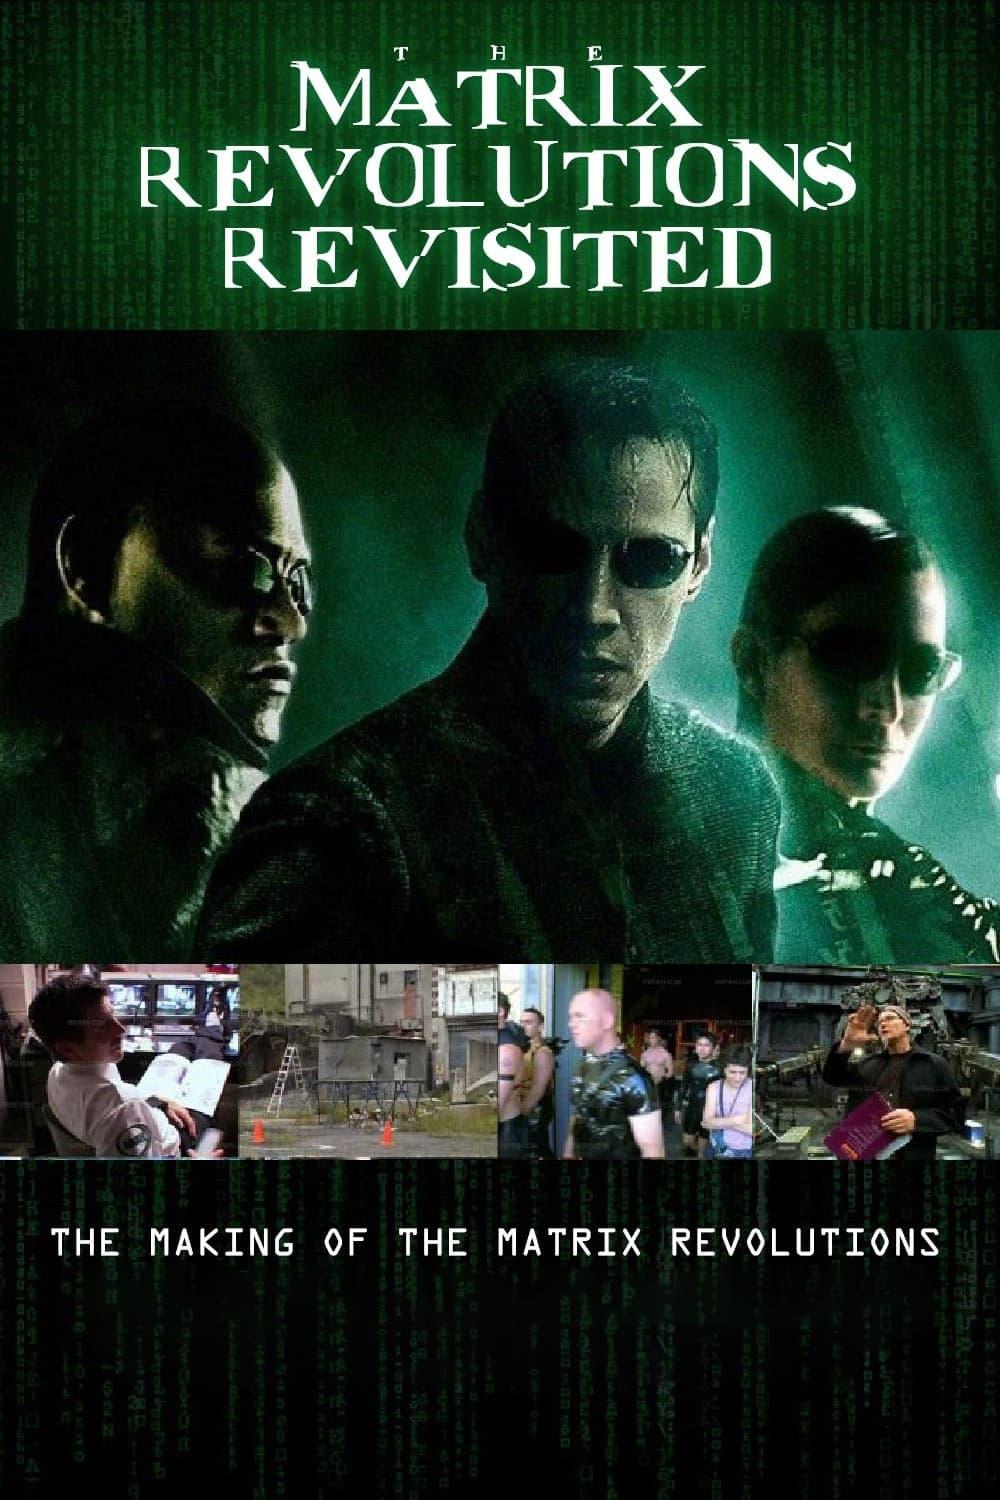 The Matrix Revolutions Revisited poster